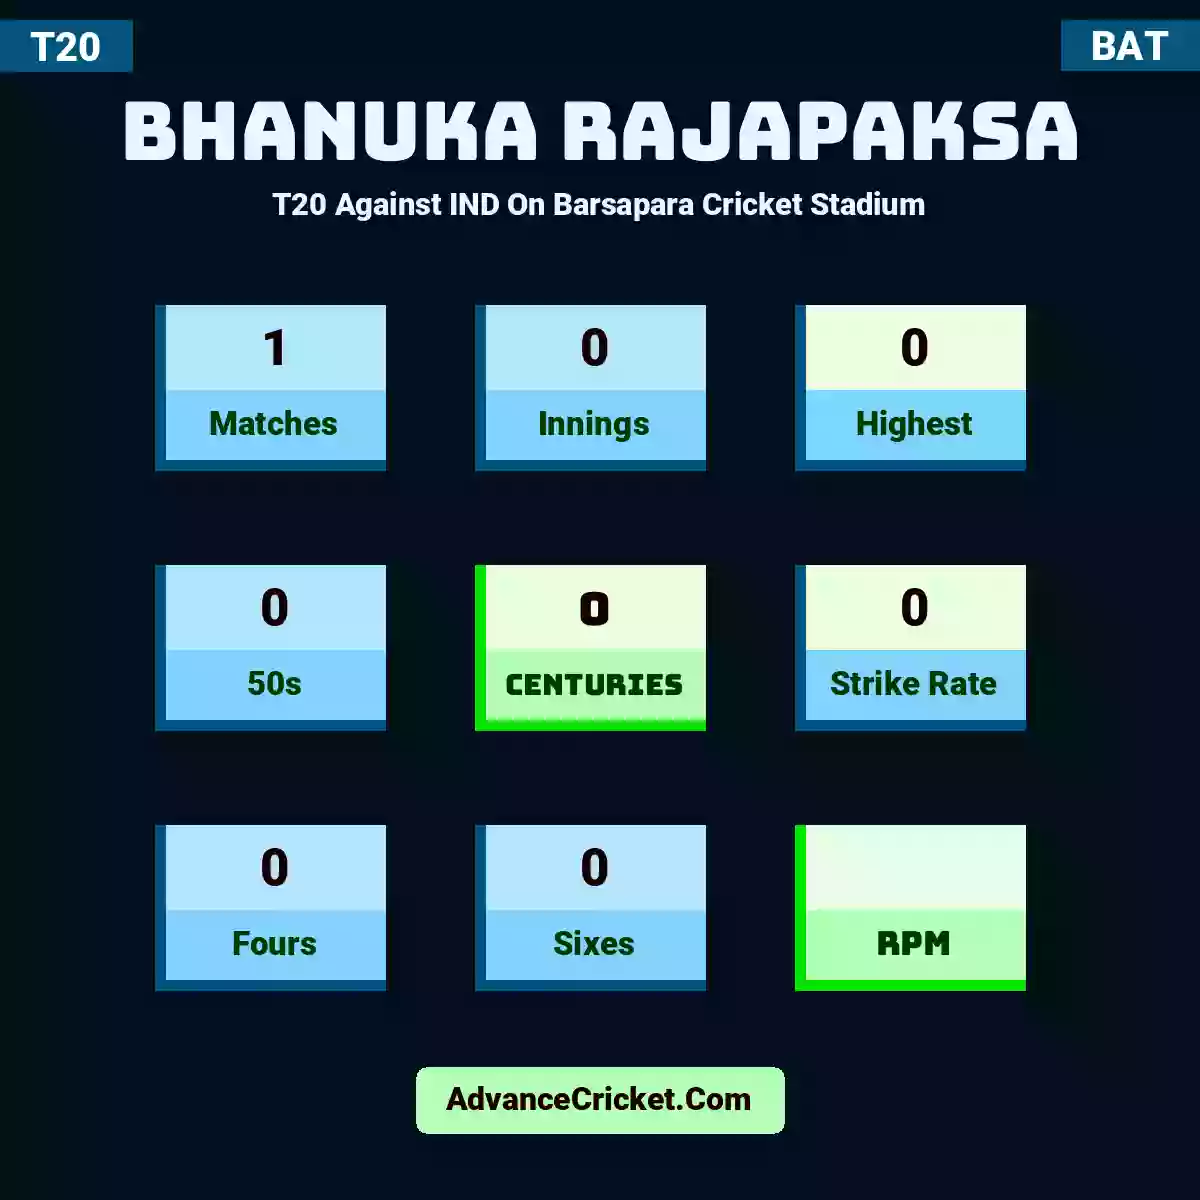 Bhanuka Rajapaksa T20  Against IND On Barsapara Cricket Stadium, Bhanuka Rajapaksa played 1 matches, scored 0 runs as highest, 0 half-centuries, and 0 centuries, with a strike rate of 0. B.Rajapaksa hit 0 fours and 0 sixes.